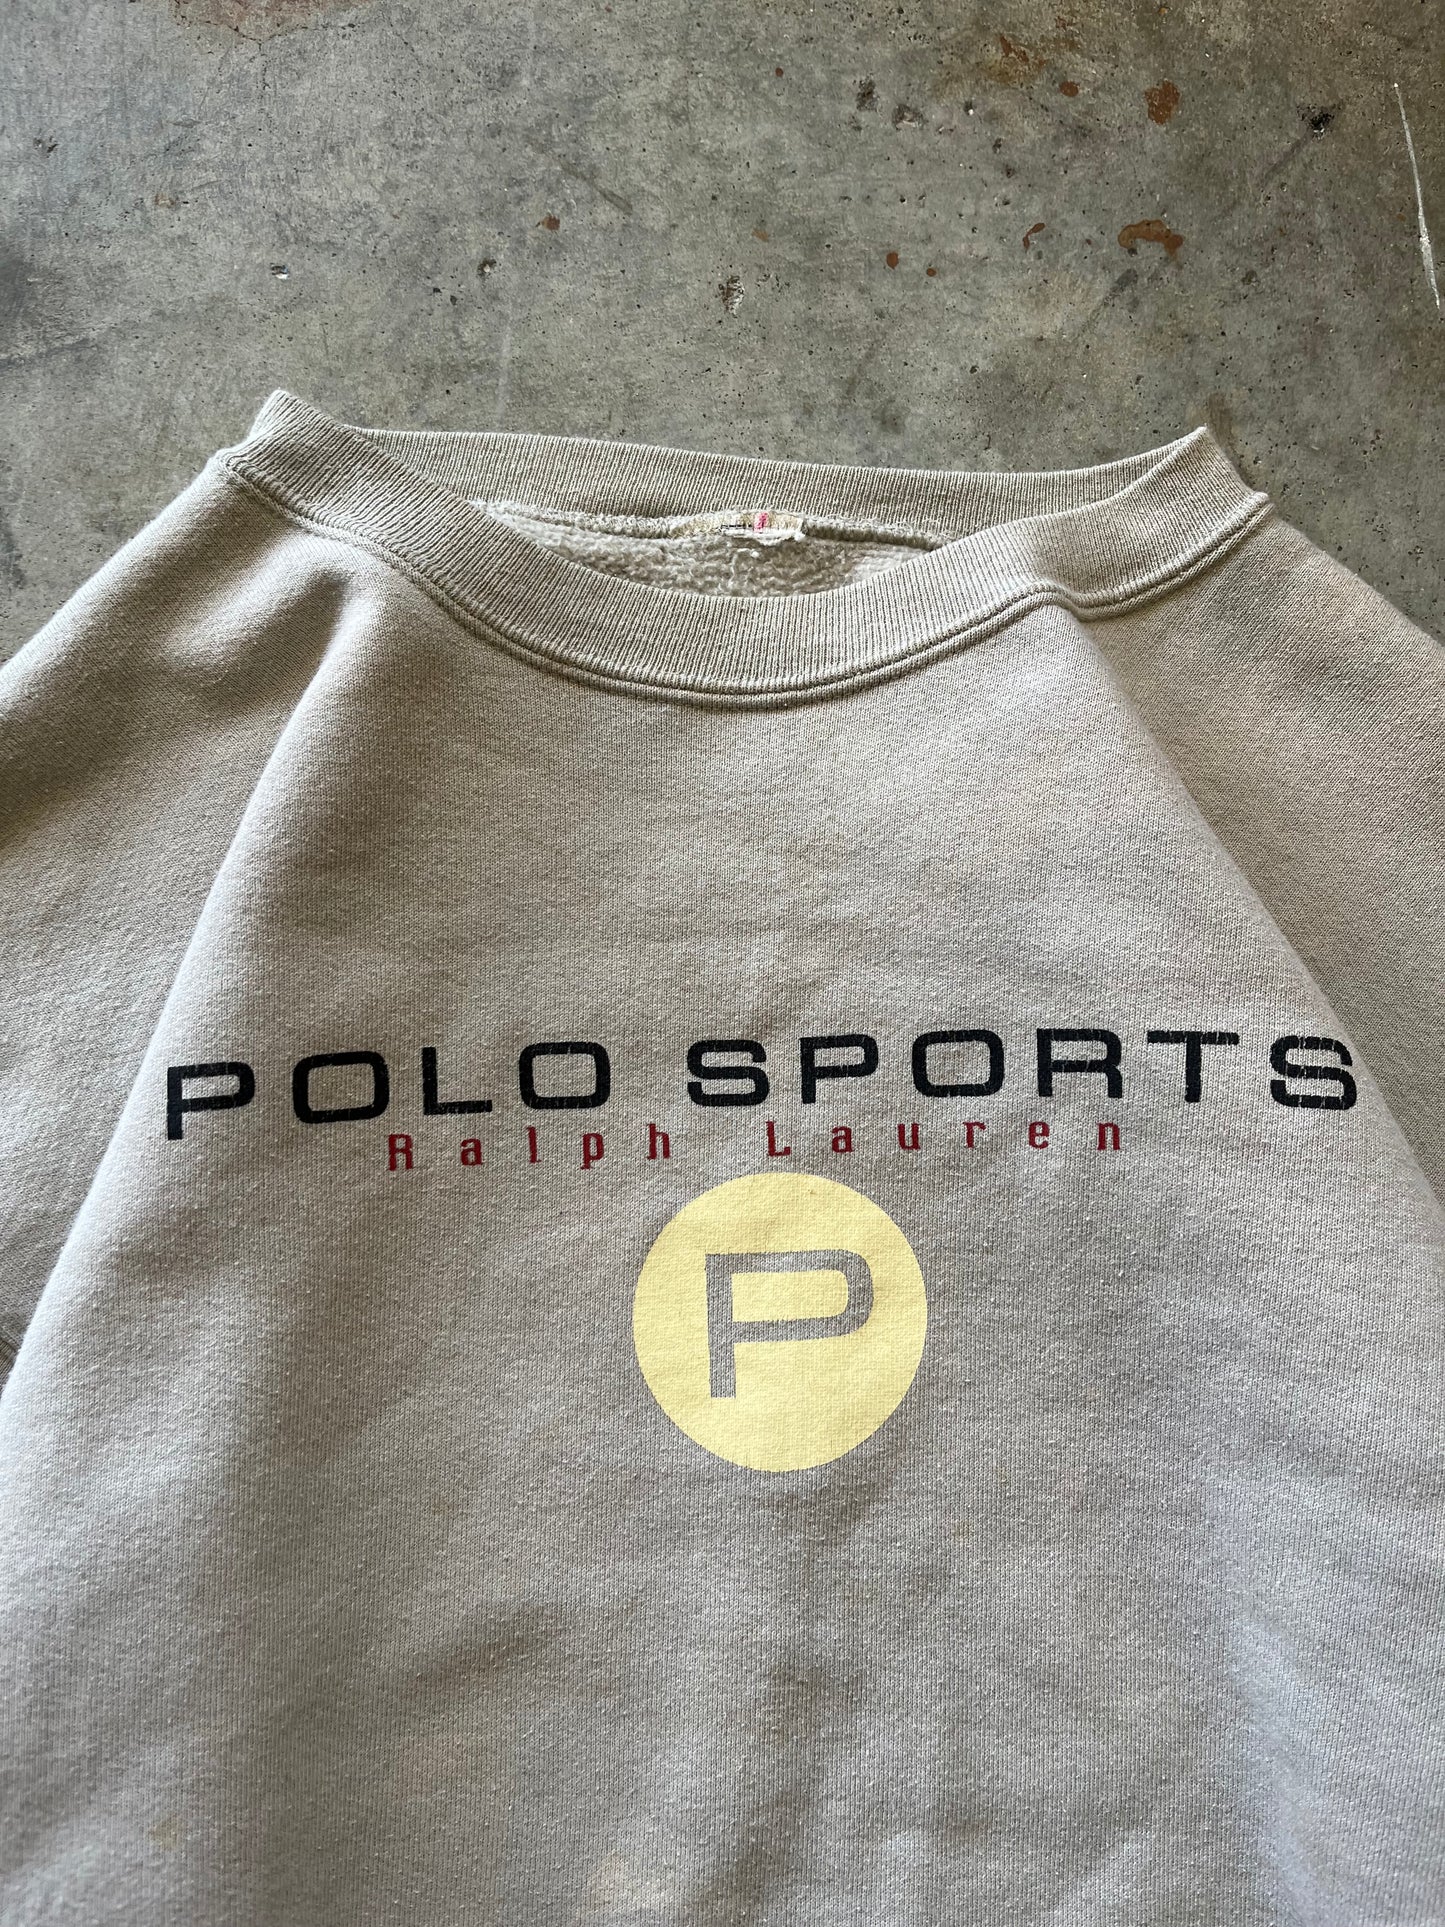 (L) Vintage Polo Sports Sweatshirt